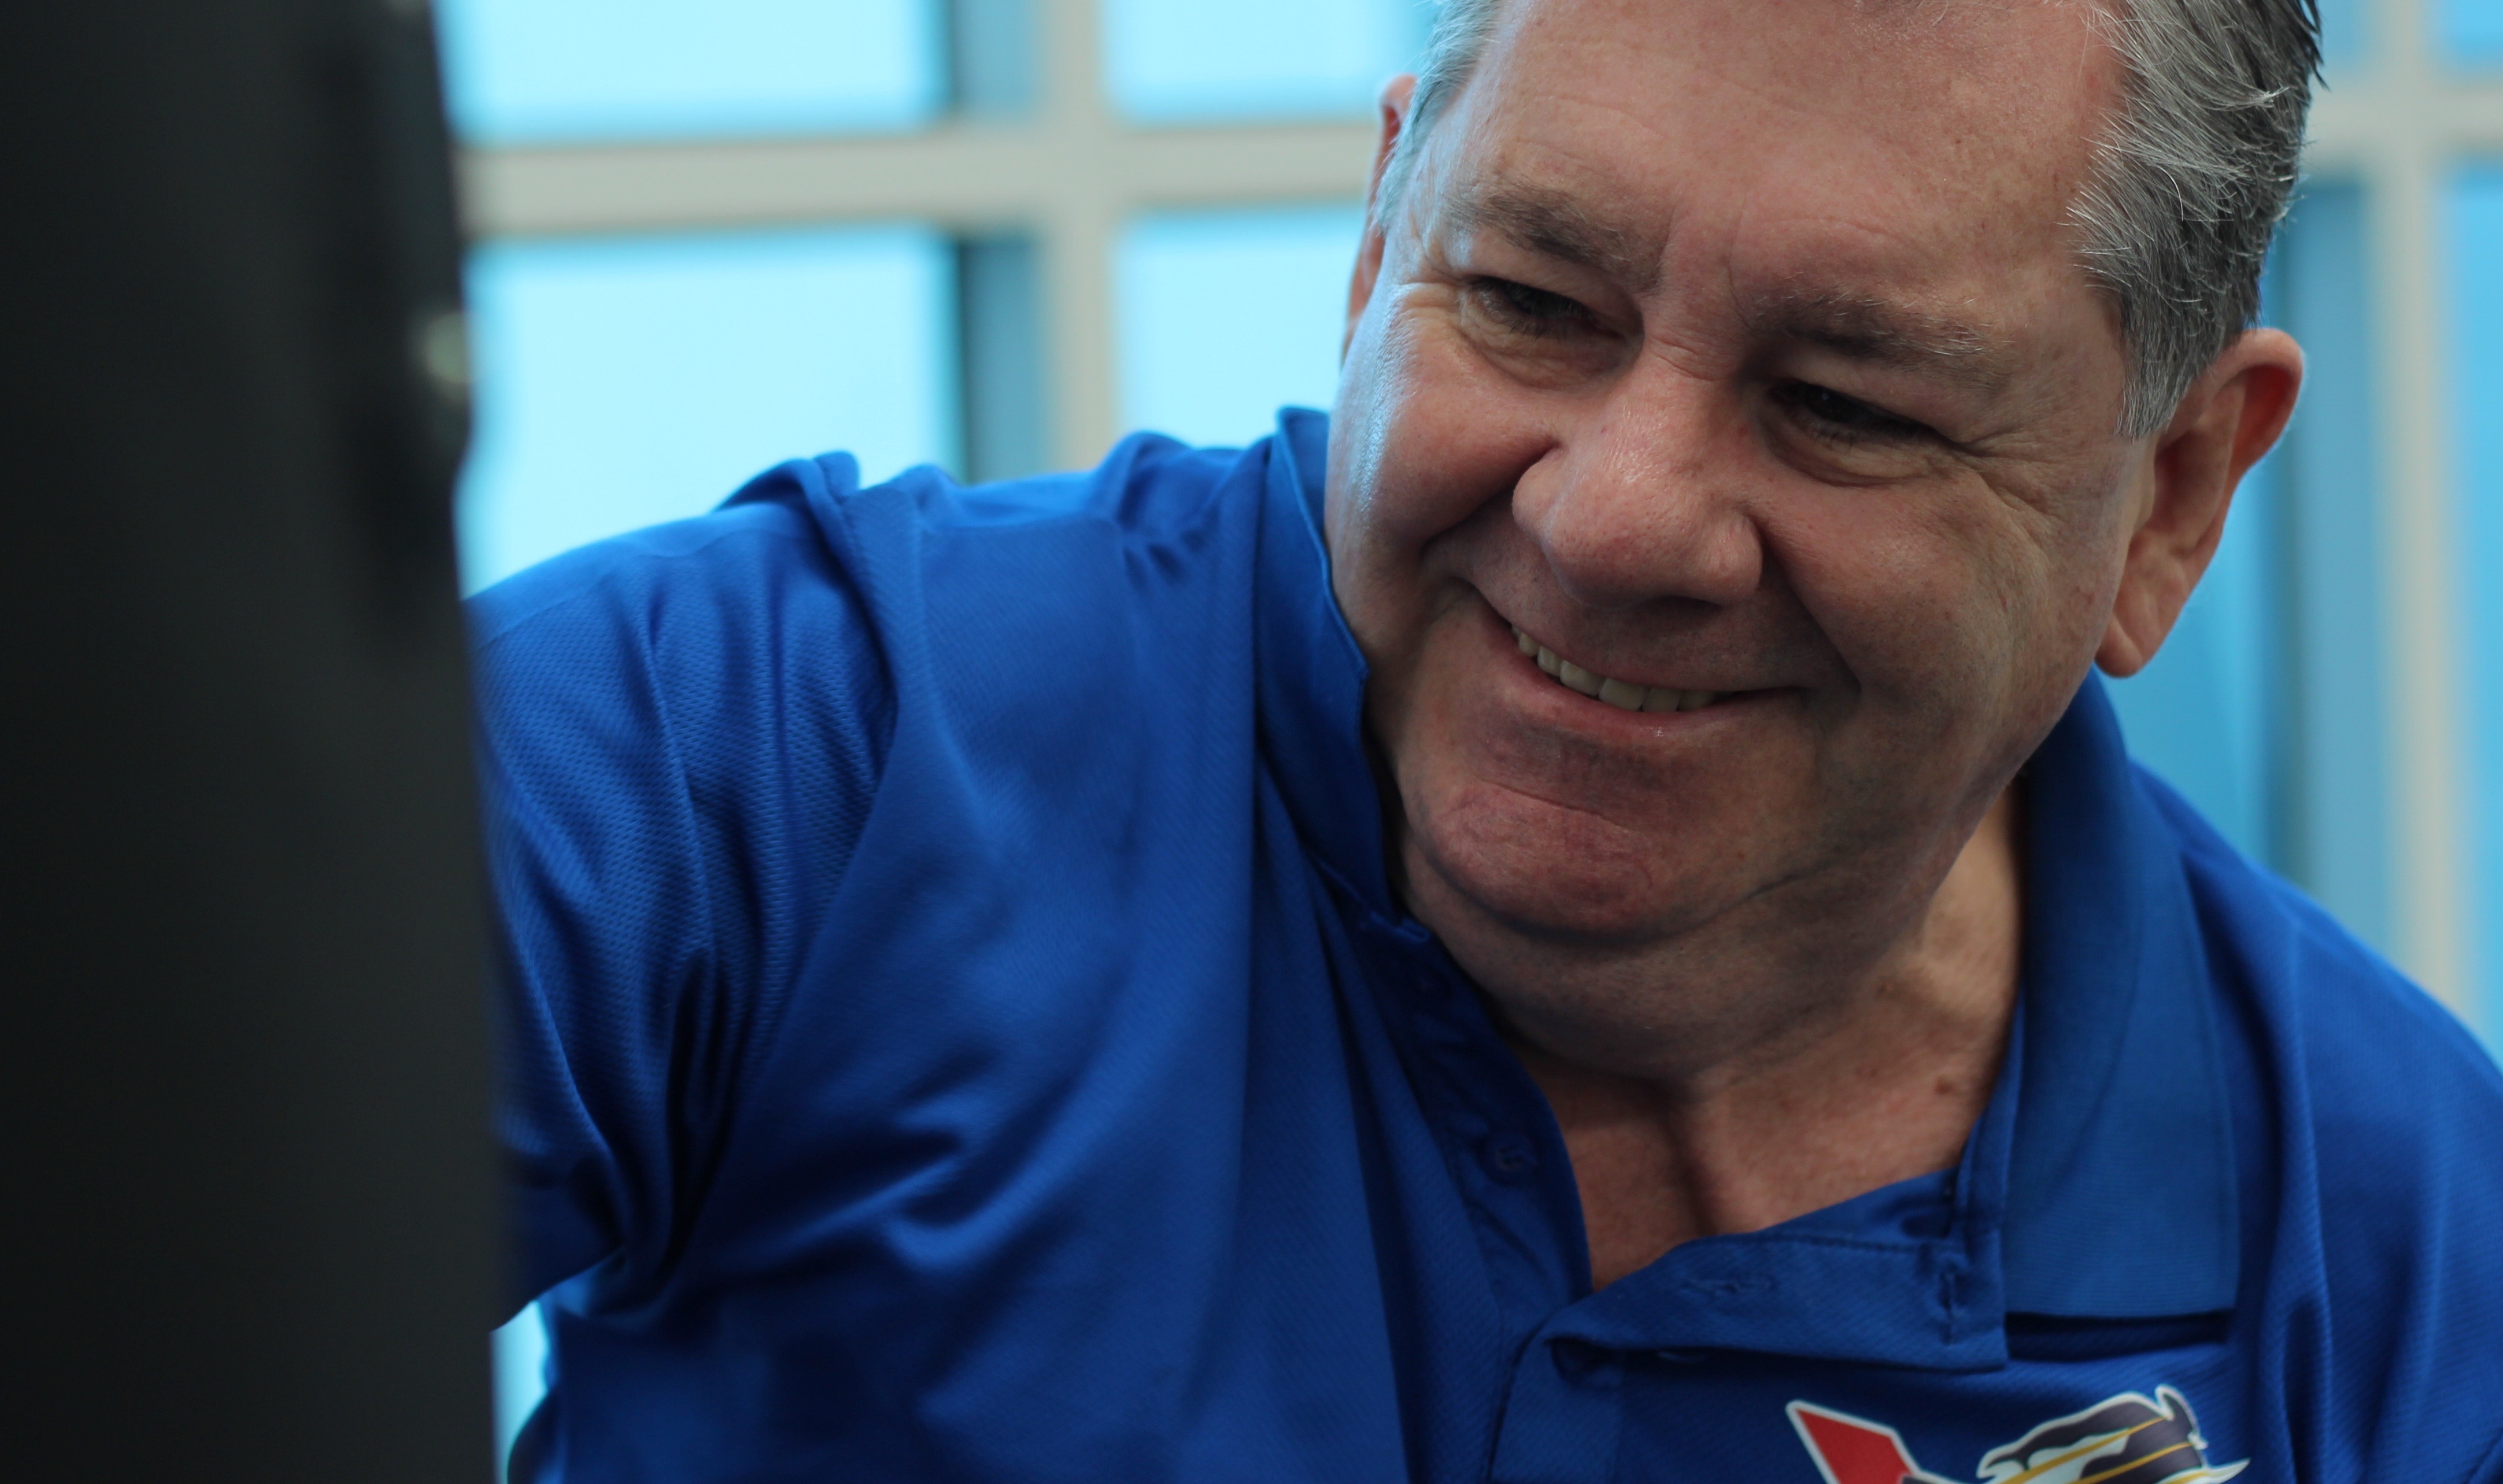 smiling man wearing blue polo shirt